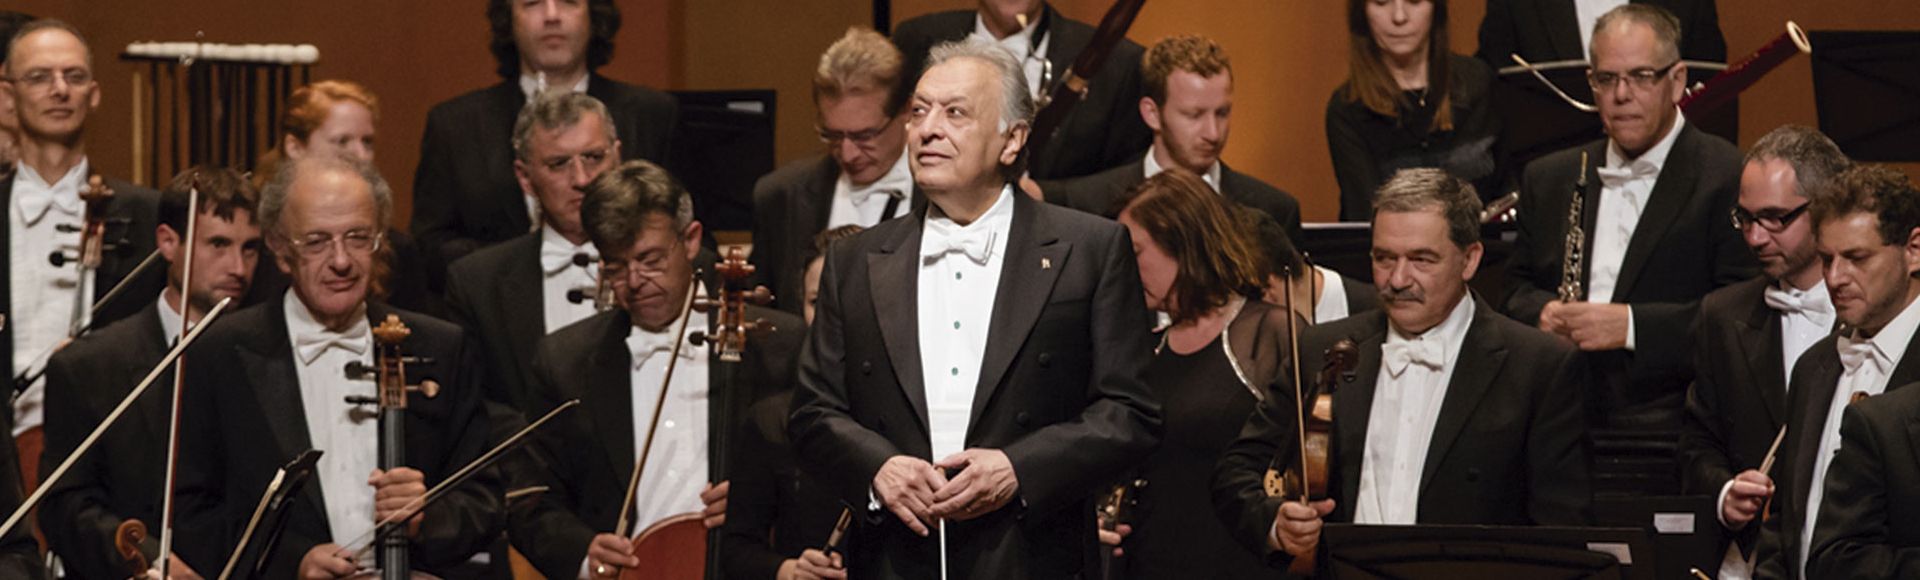 Orquesta Filarmónica de Israel - Director: Zubin Mehta, India